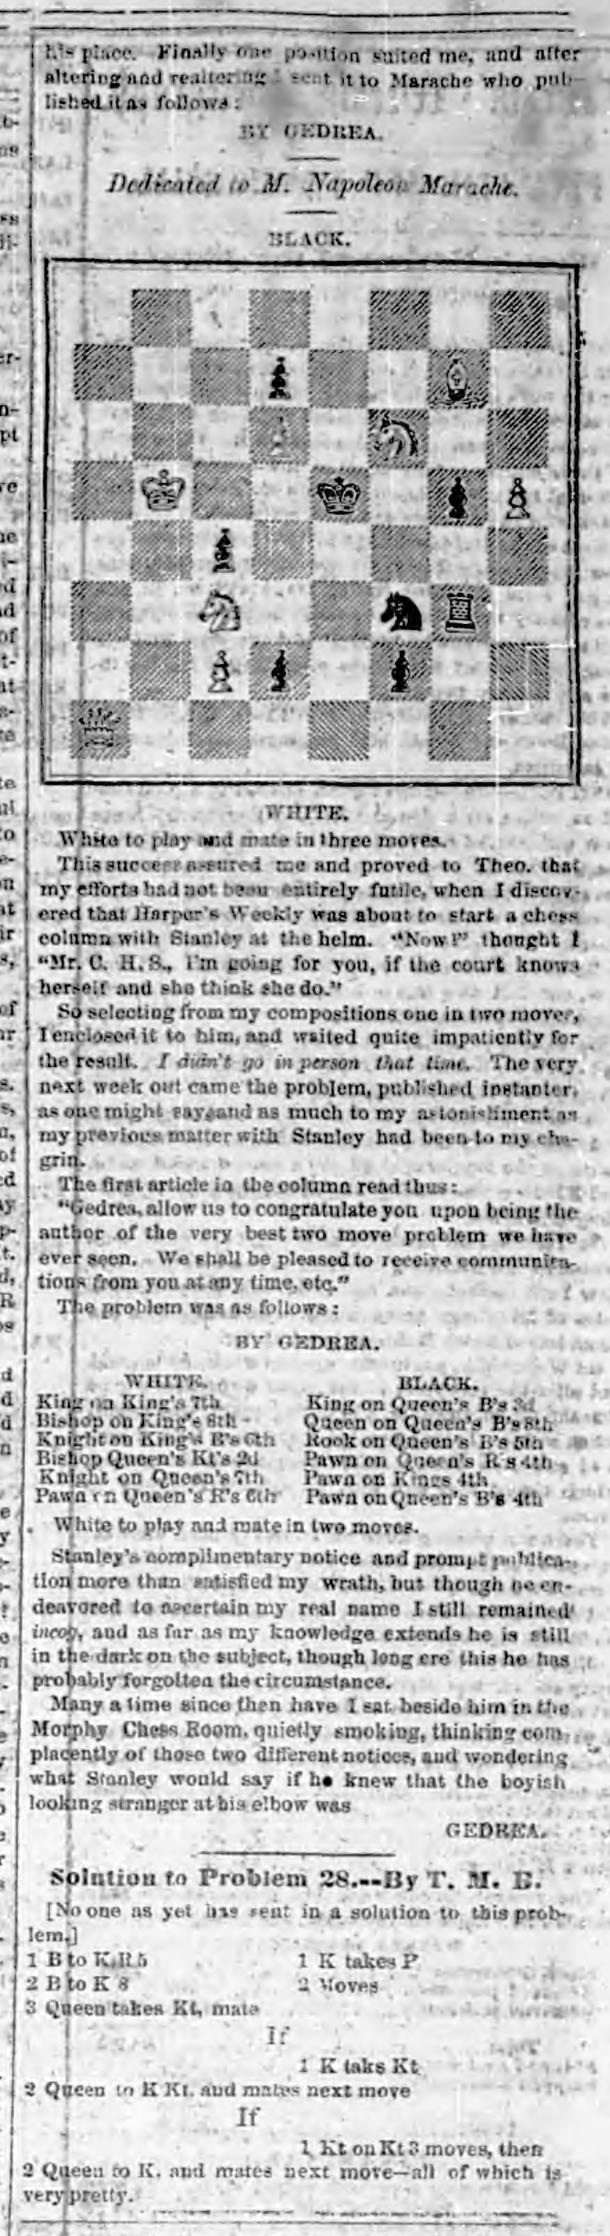 1867.03.08-02 Macon Georgia Weekly Telegraph.jpg